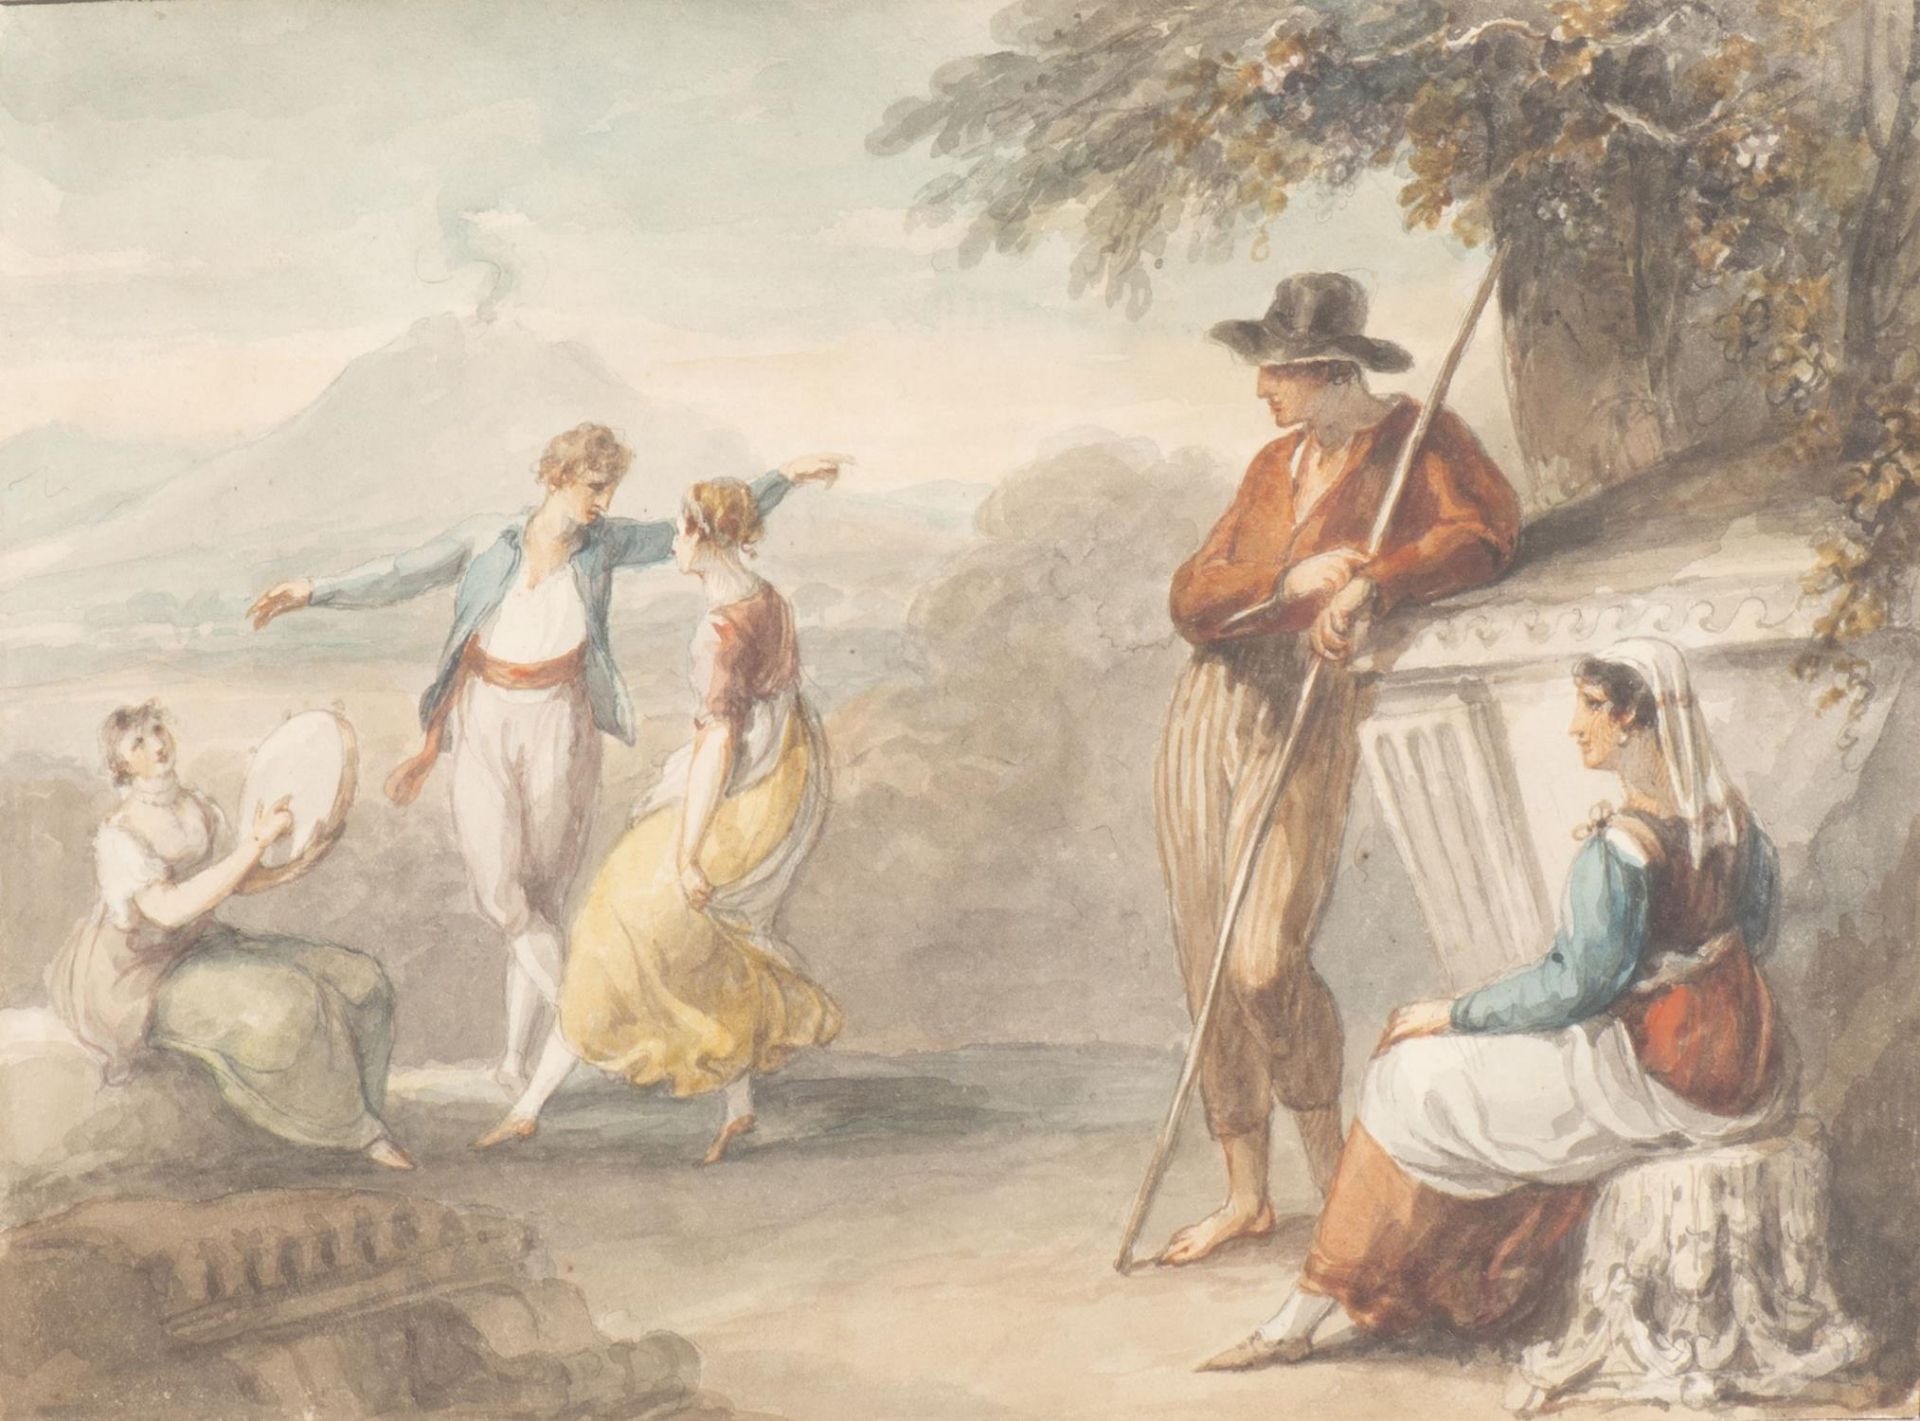 Johann Heinrich RAMBERG (1763-1840) "Jeune gens de Naples dansant la tarentelle, avec une jeune femm